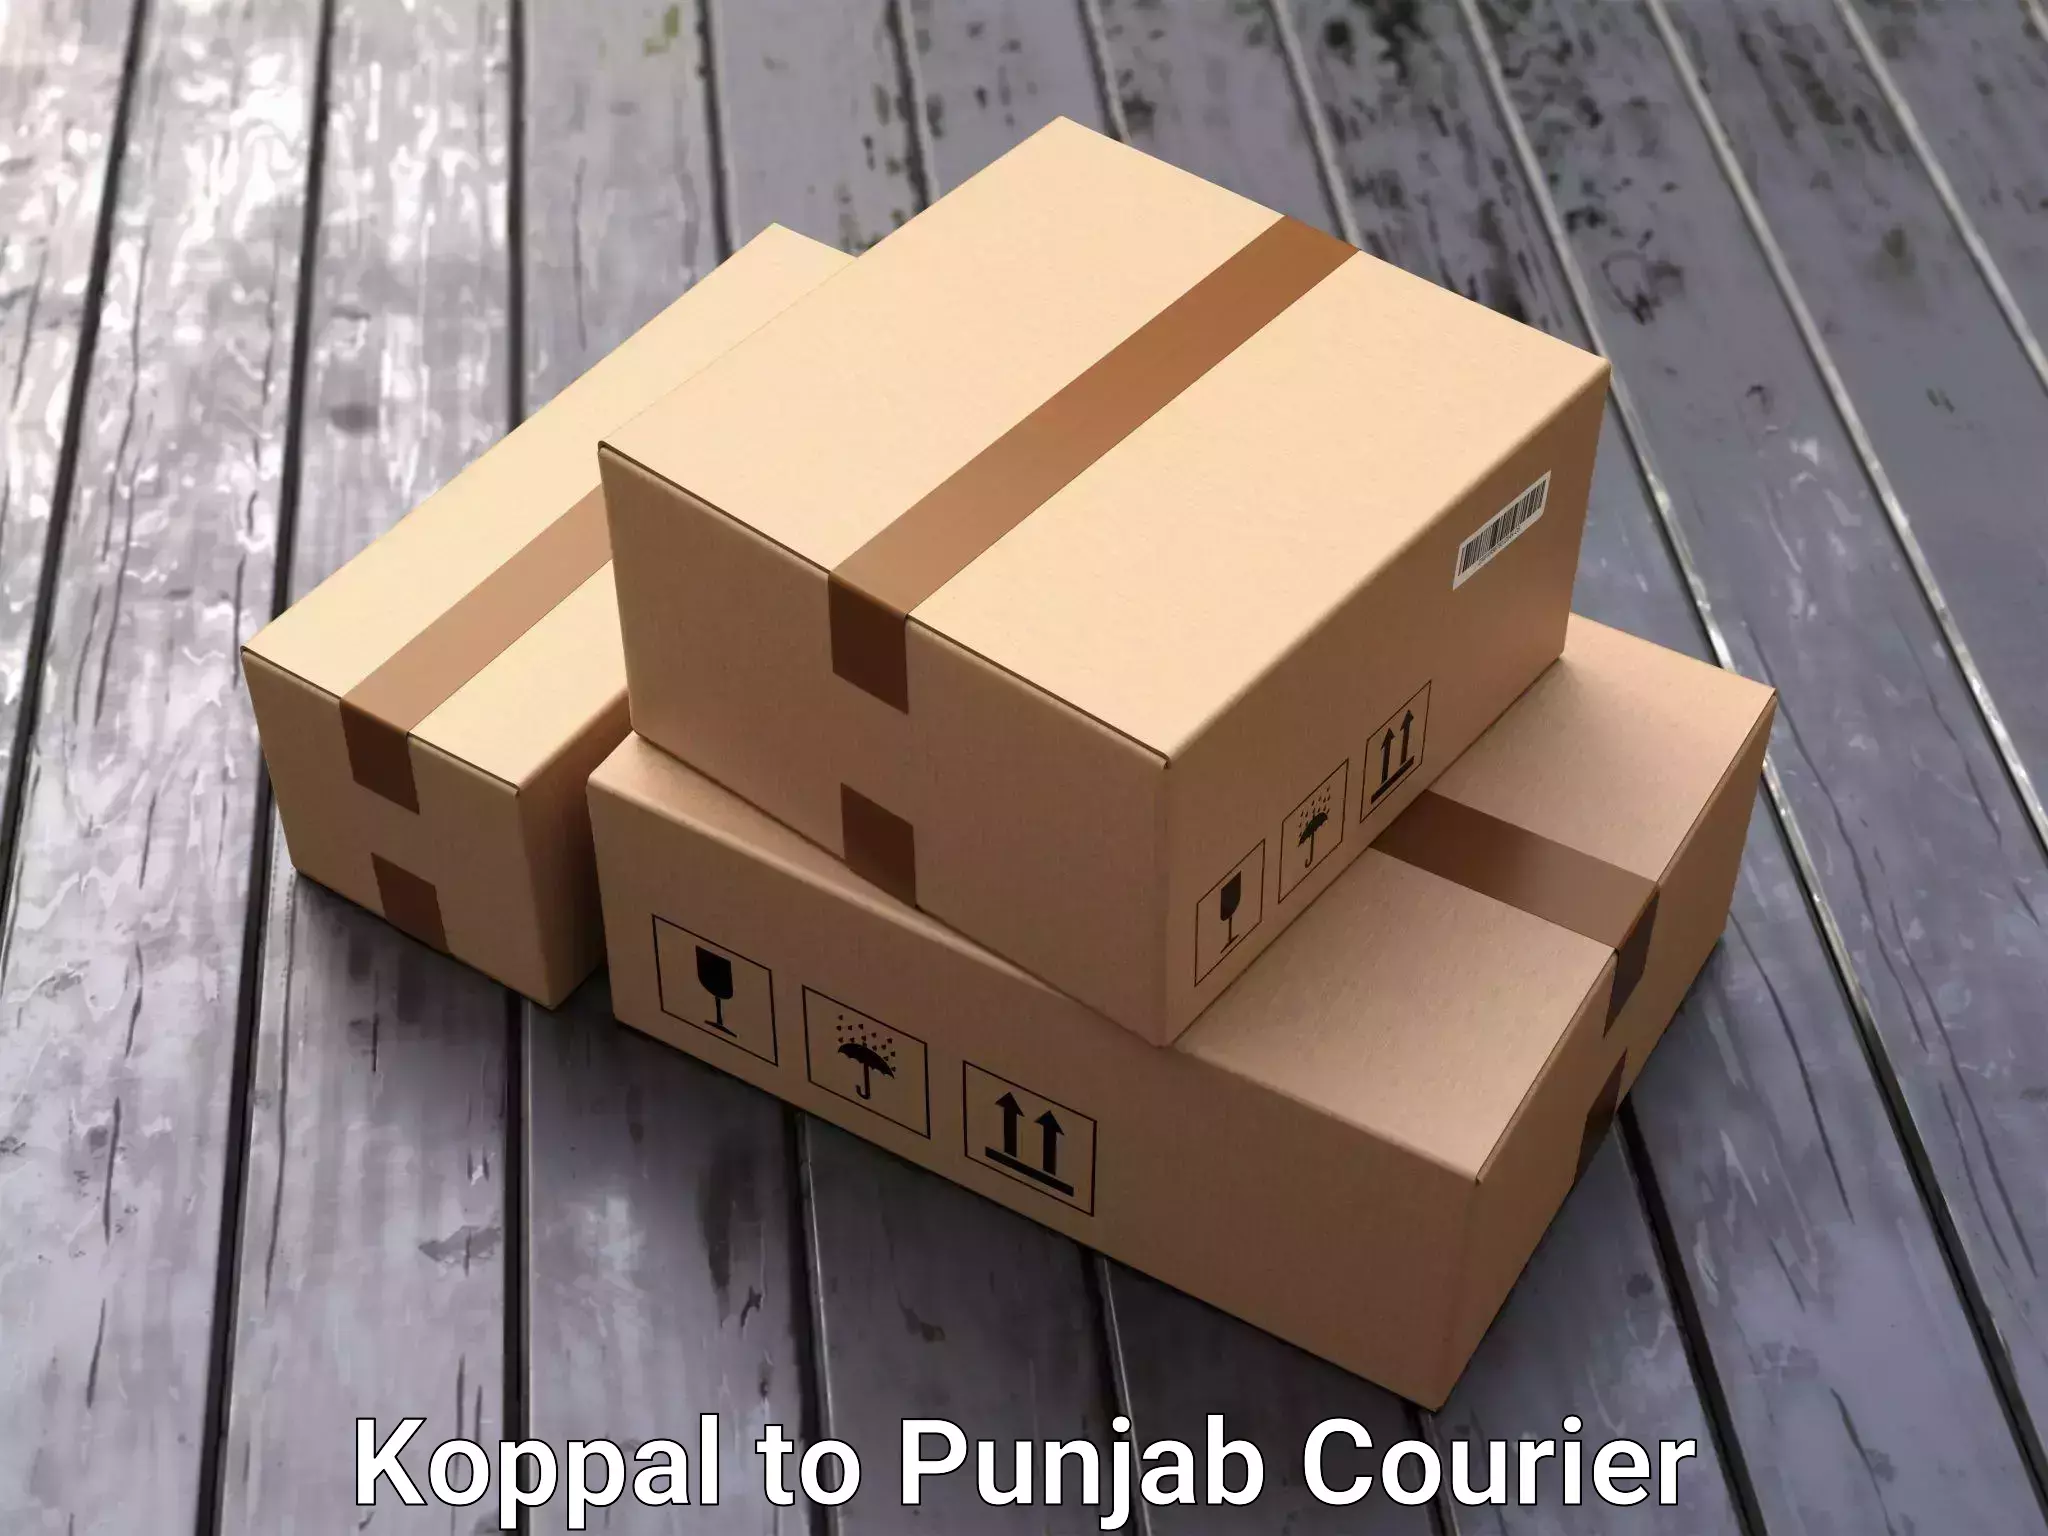 Furniture delivery service Koppal to Kotkapura